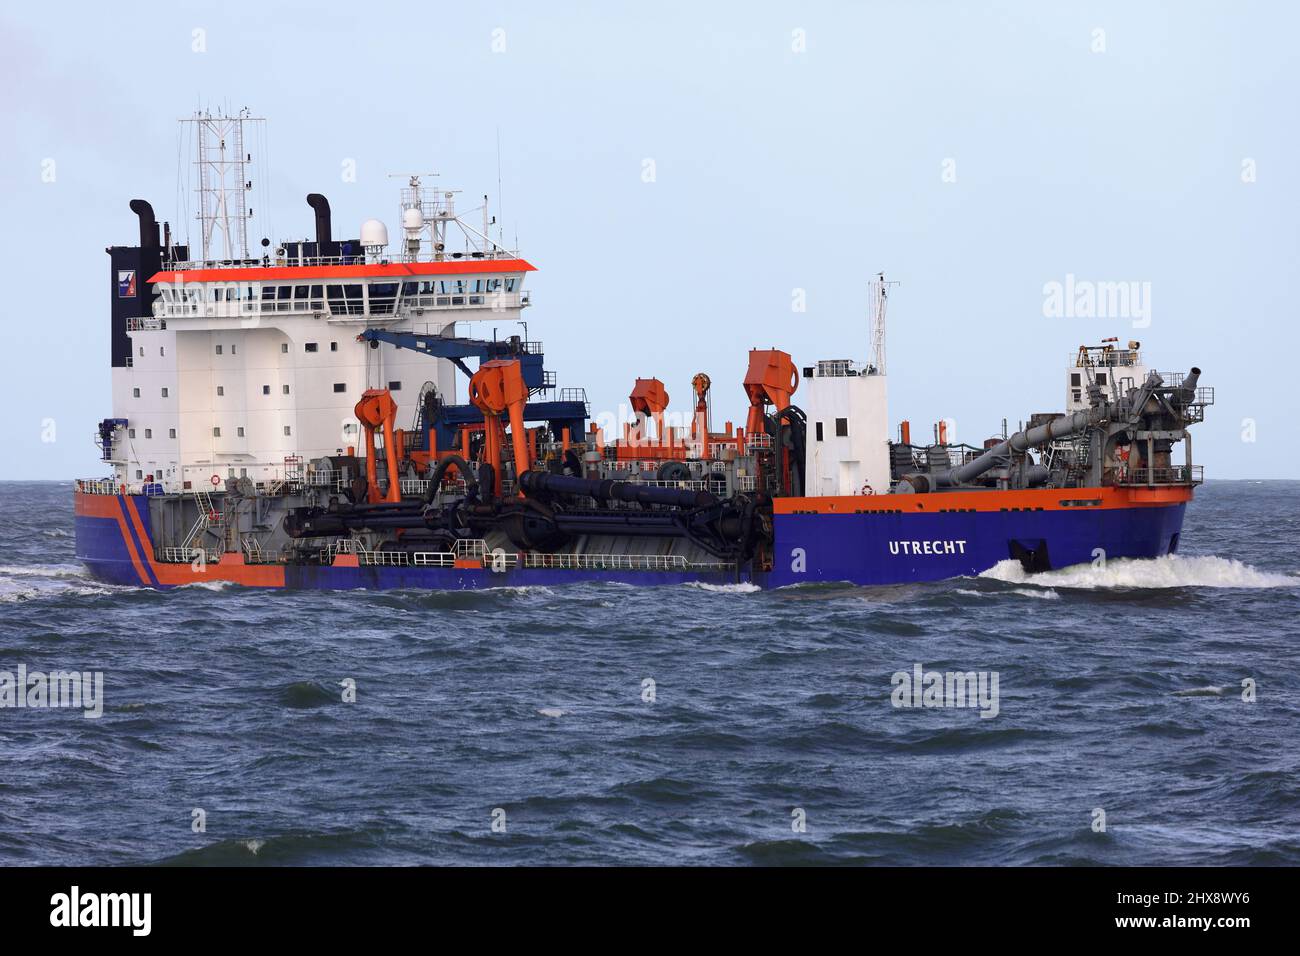 The dredger Utrecht arrives in the port of Rotterdam on January 30, 2022. Stock Photo